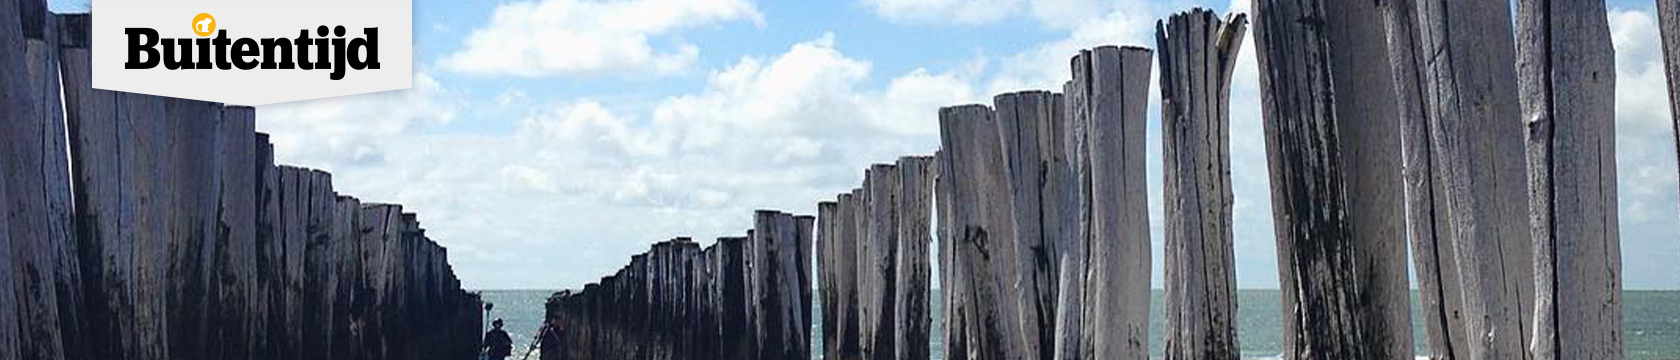 Boswachter Wendy: Grevelingenmeer in Zeeland is mijn favoriete plek in NL